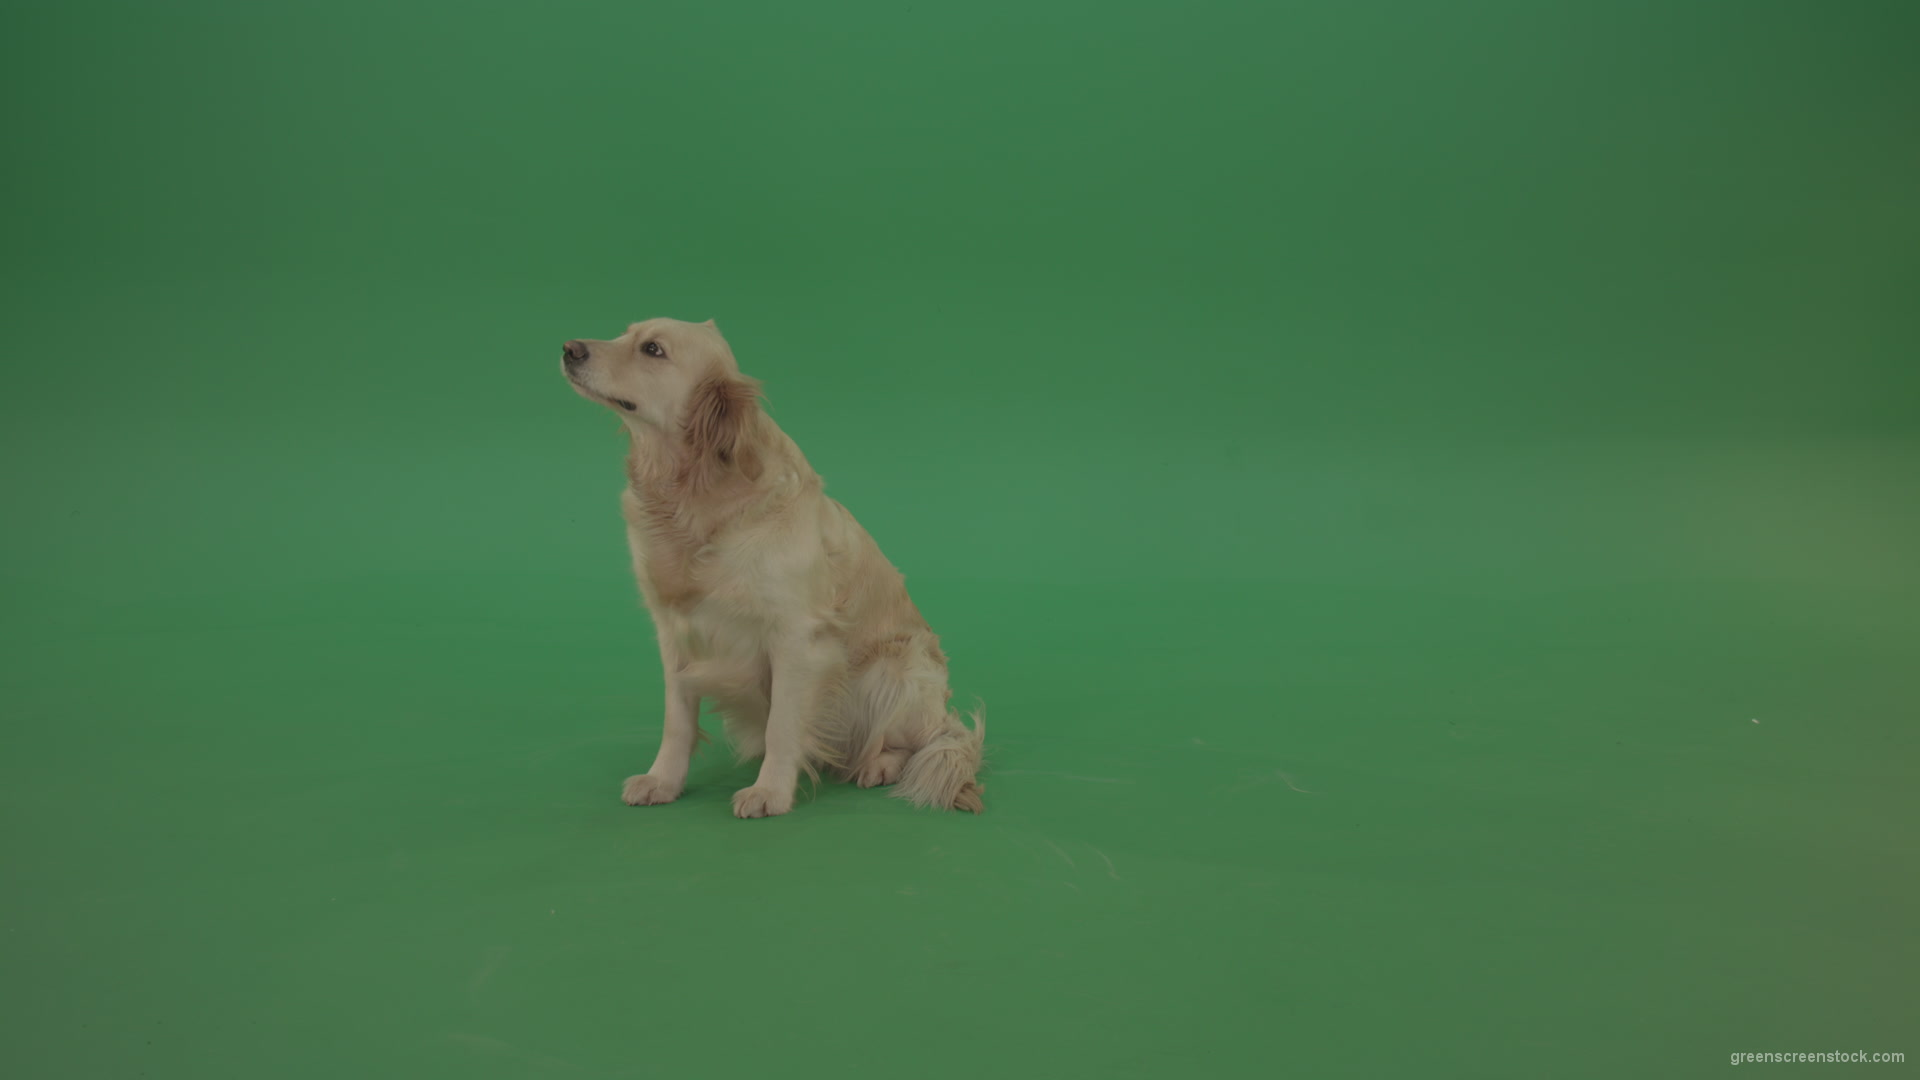 Golden-Retriever-Gun-Dog-sittin-and-eat-isolated-on-green-screen-4K-video-footage_005 Green Screen Stock